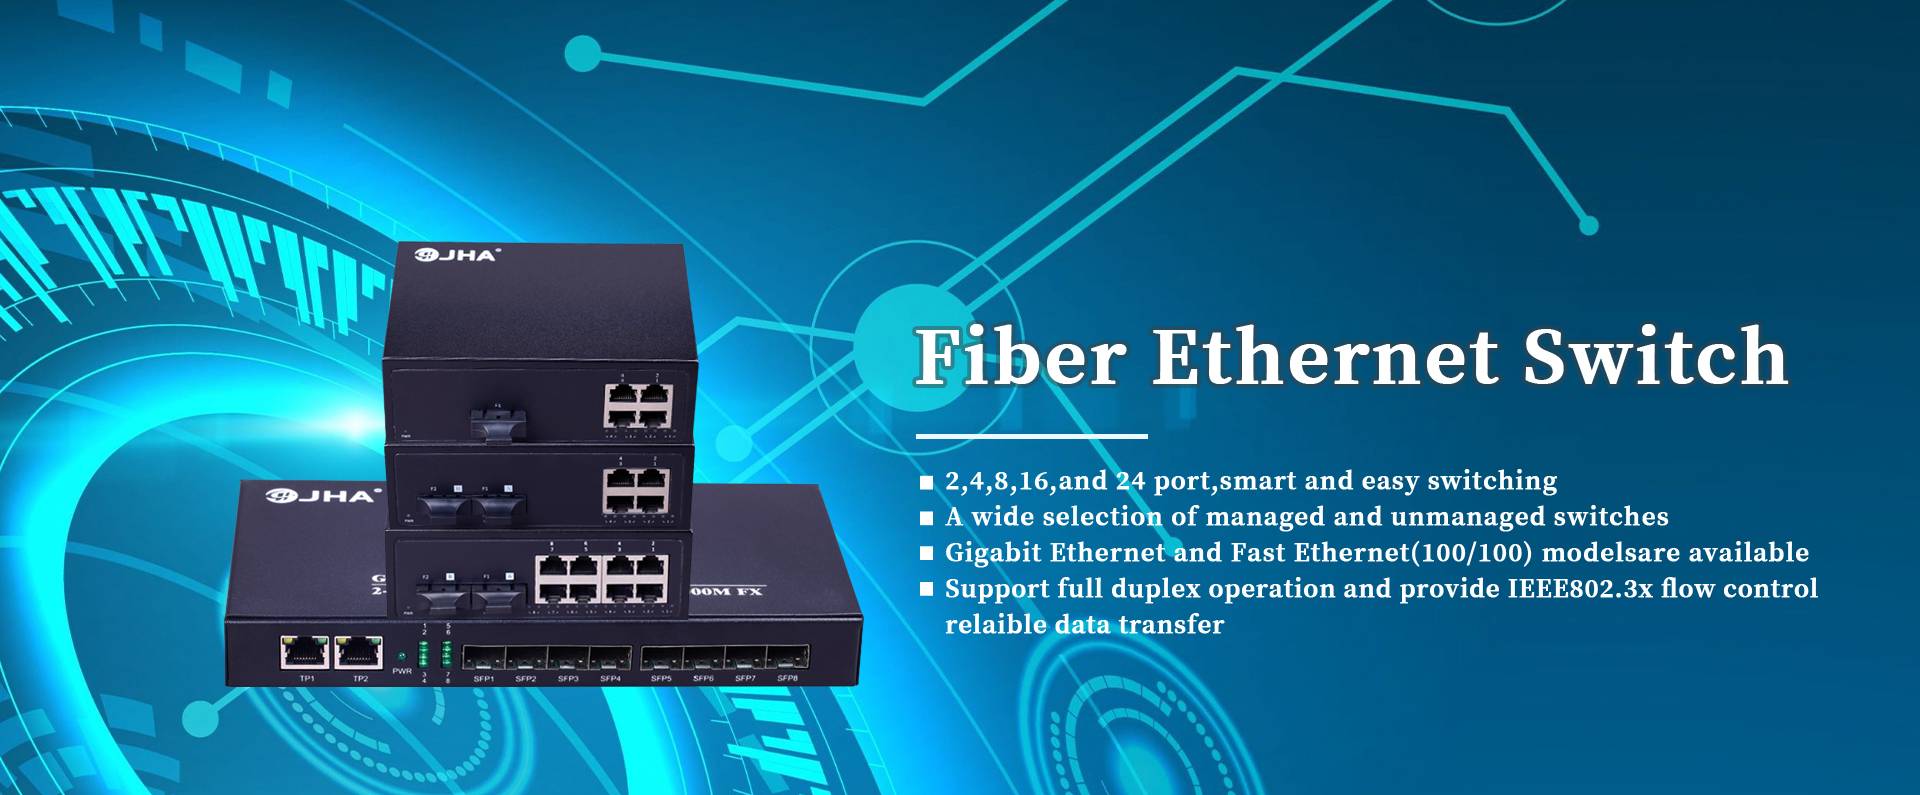 Fibre Ethernet Pagbalhin